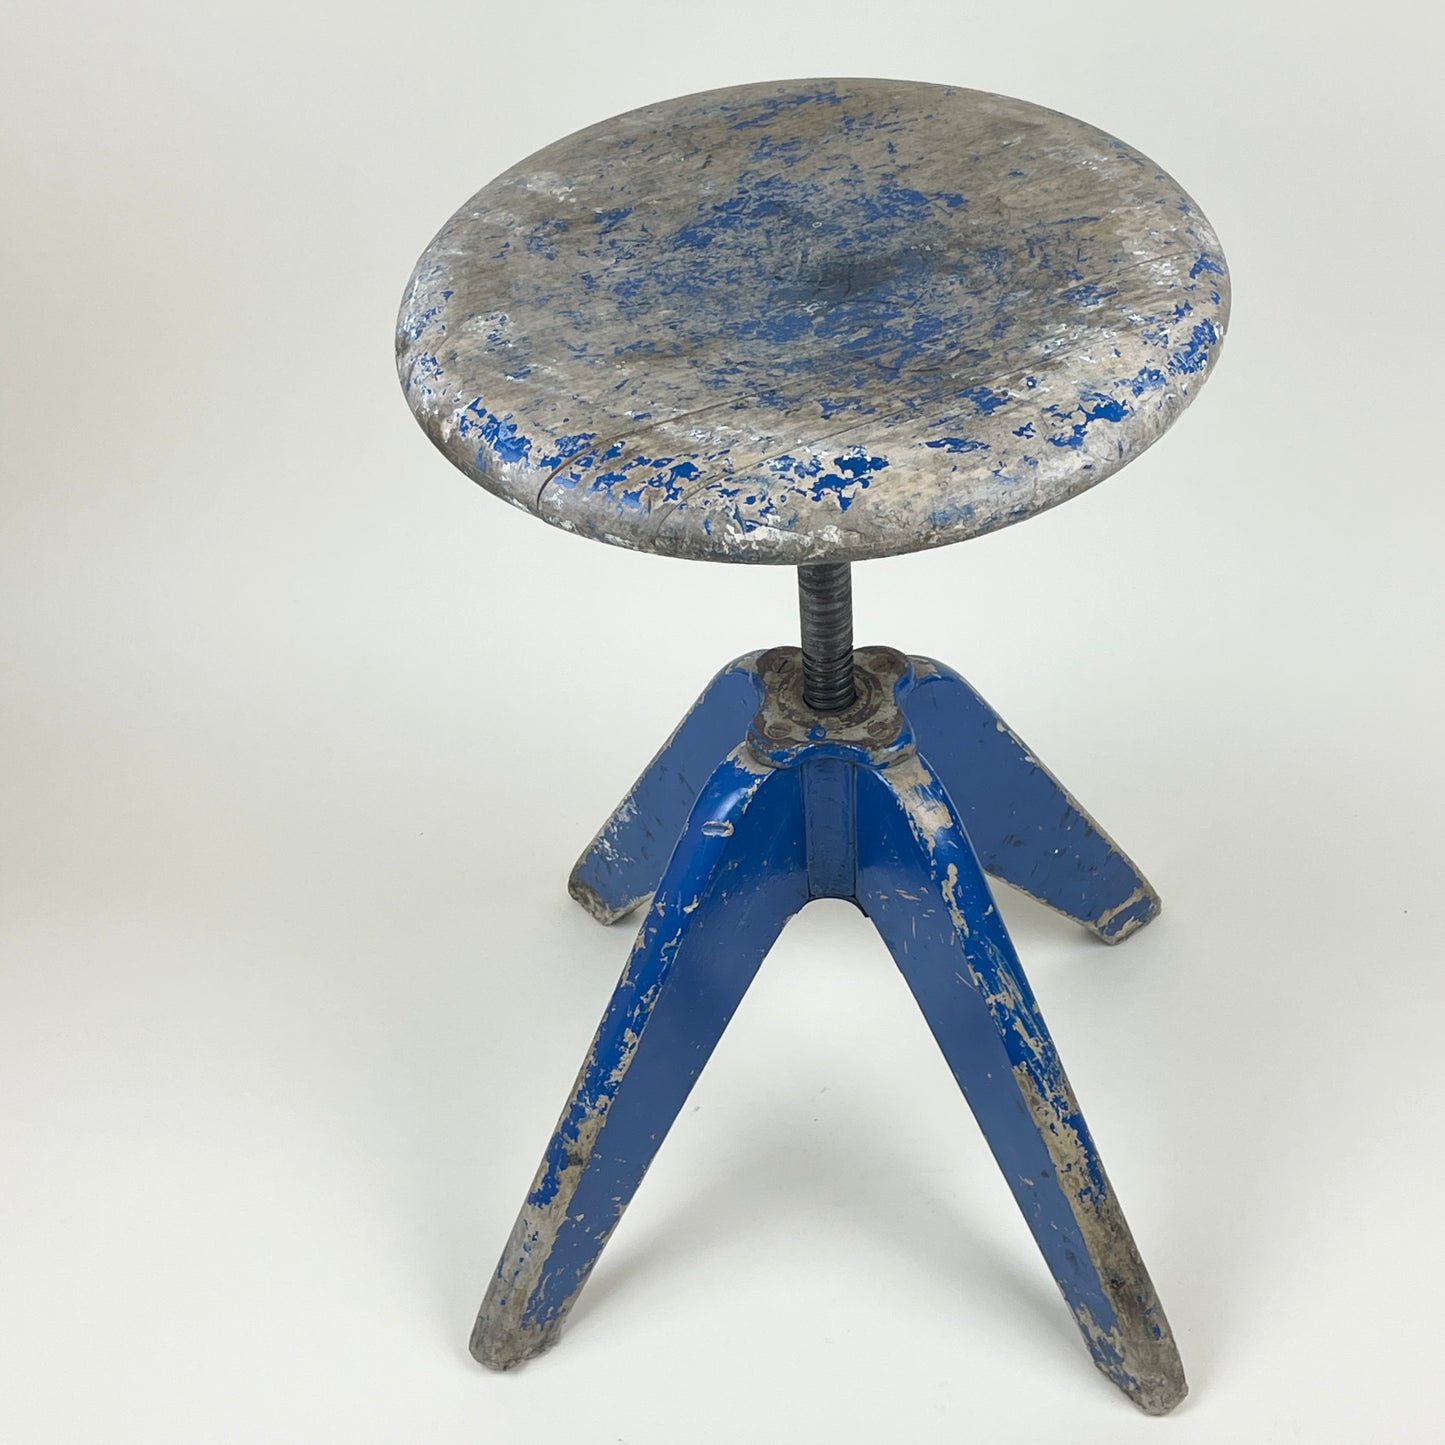 Blue industry stool, vintage